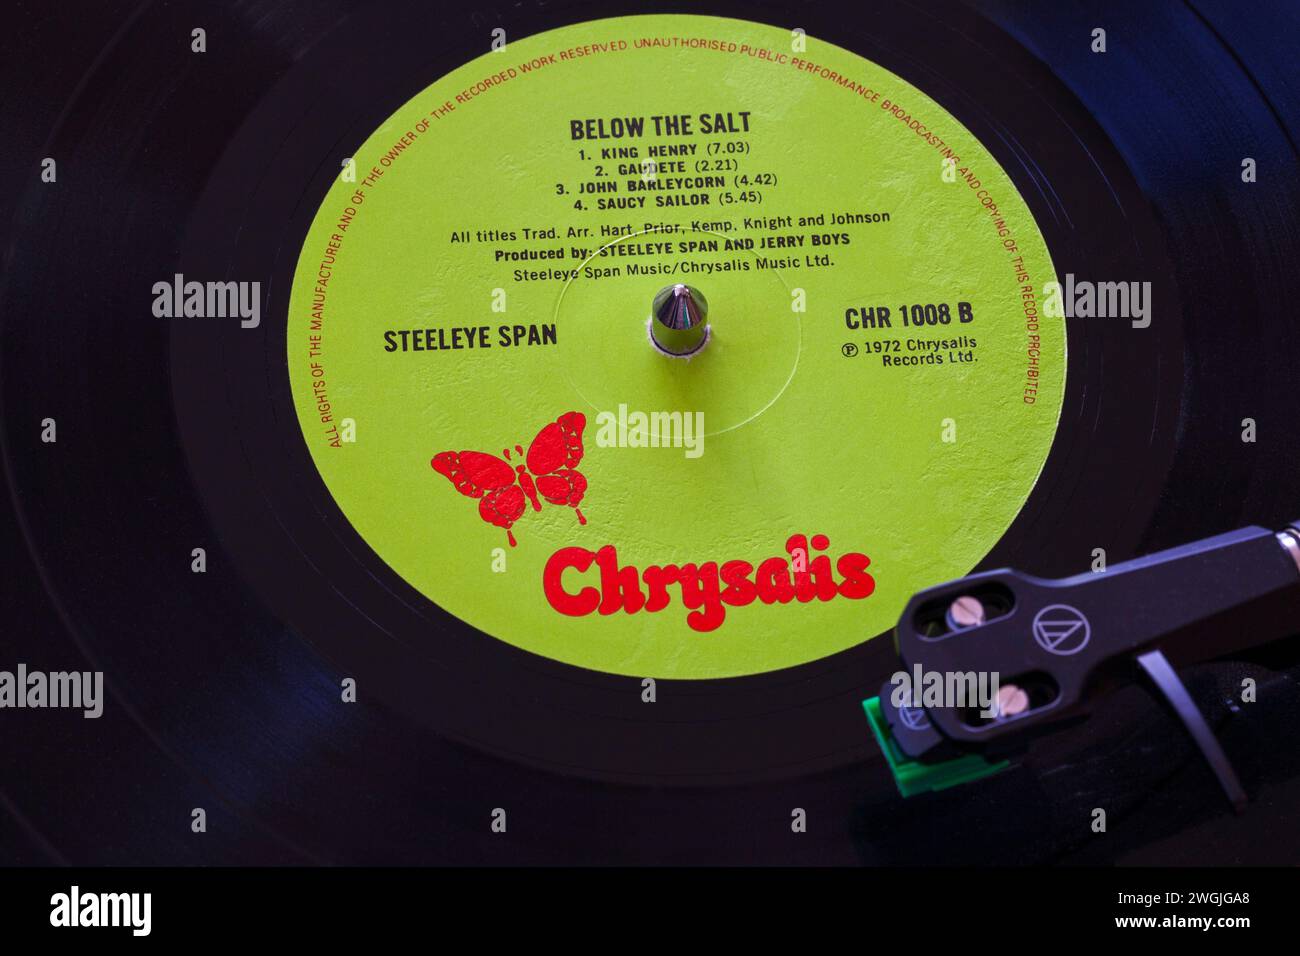 Steeleye Span Below the Salt vinyl record album LP with tonearm, cartridge, headshell and stylus on turntable record player - 1972 Stock Photo